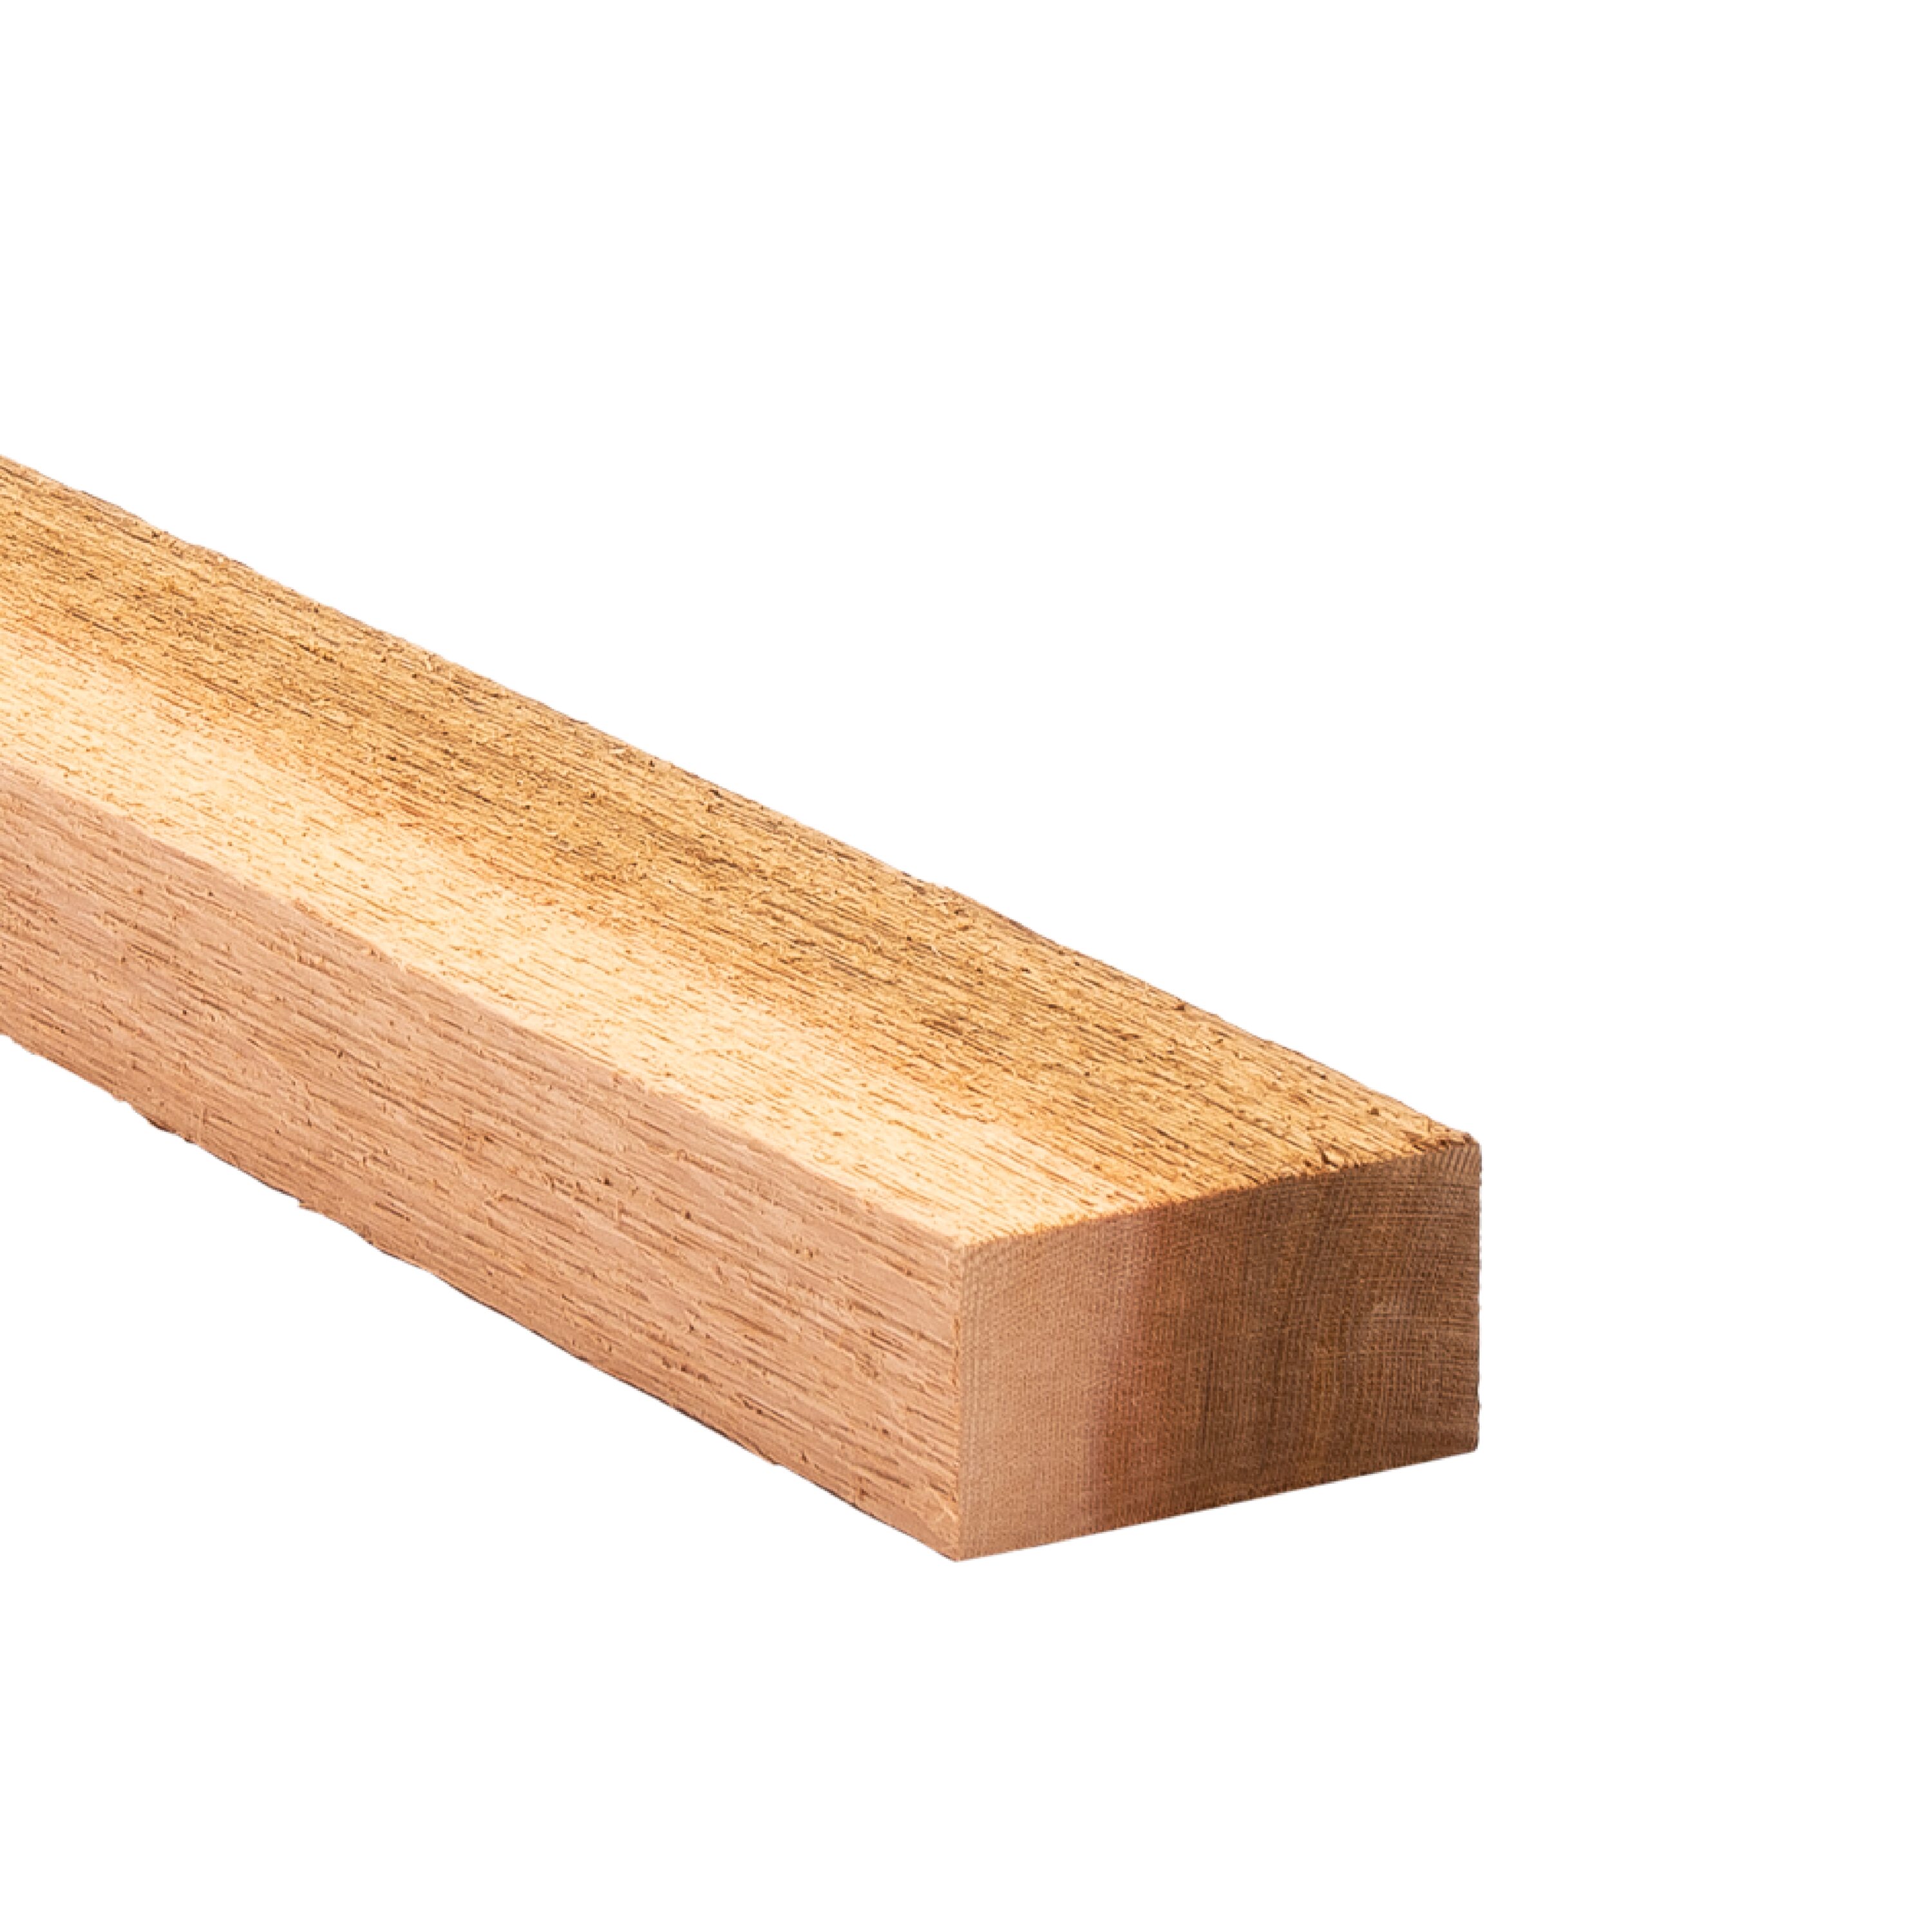 4/4 1” Eastern Red Cedar Boards - Kiln Dried Dimensional Lumber - Cut -  boardandlog